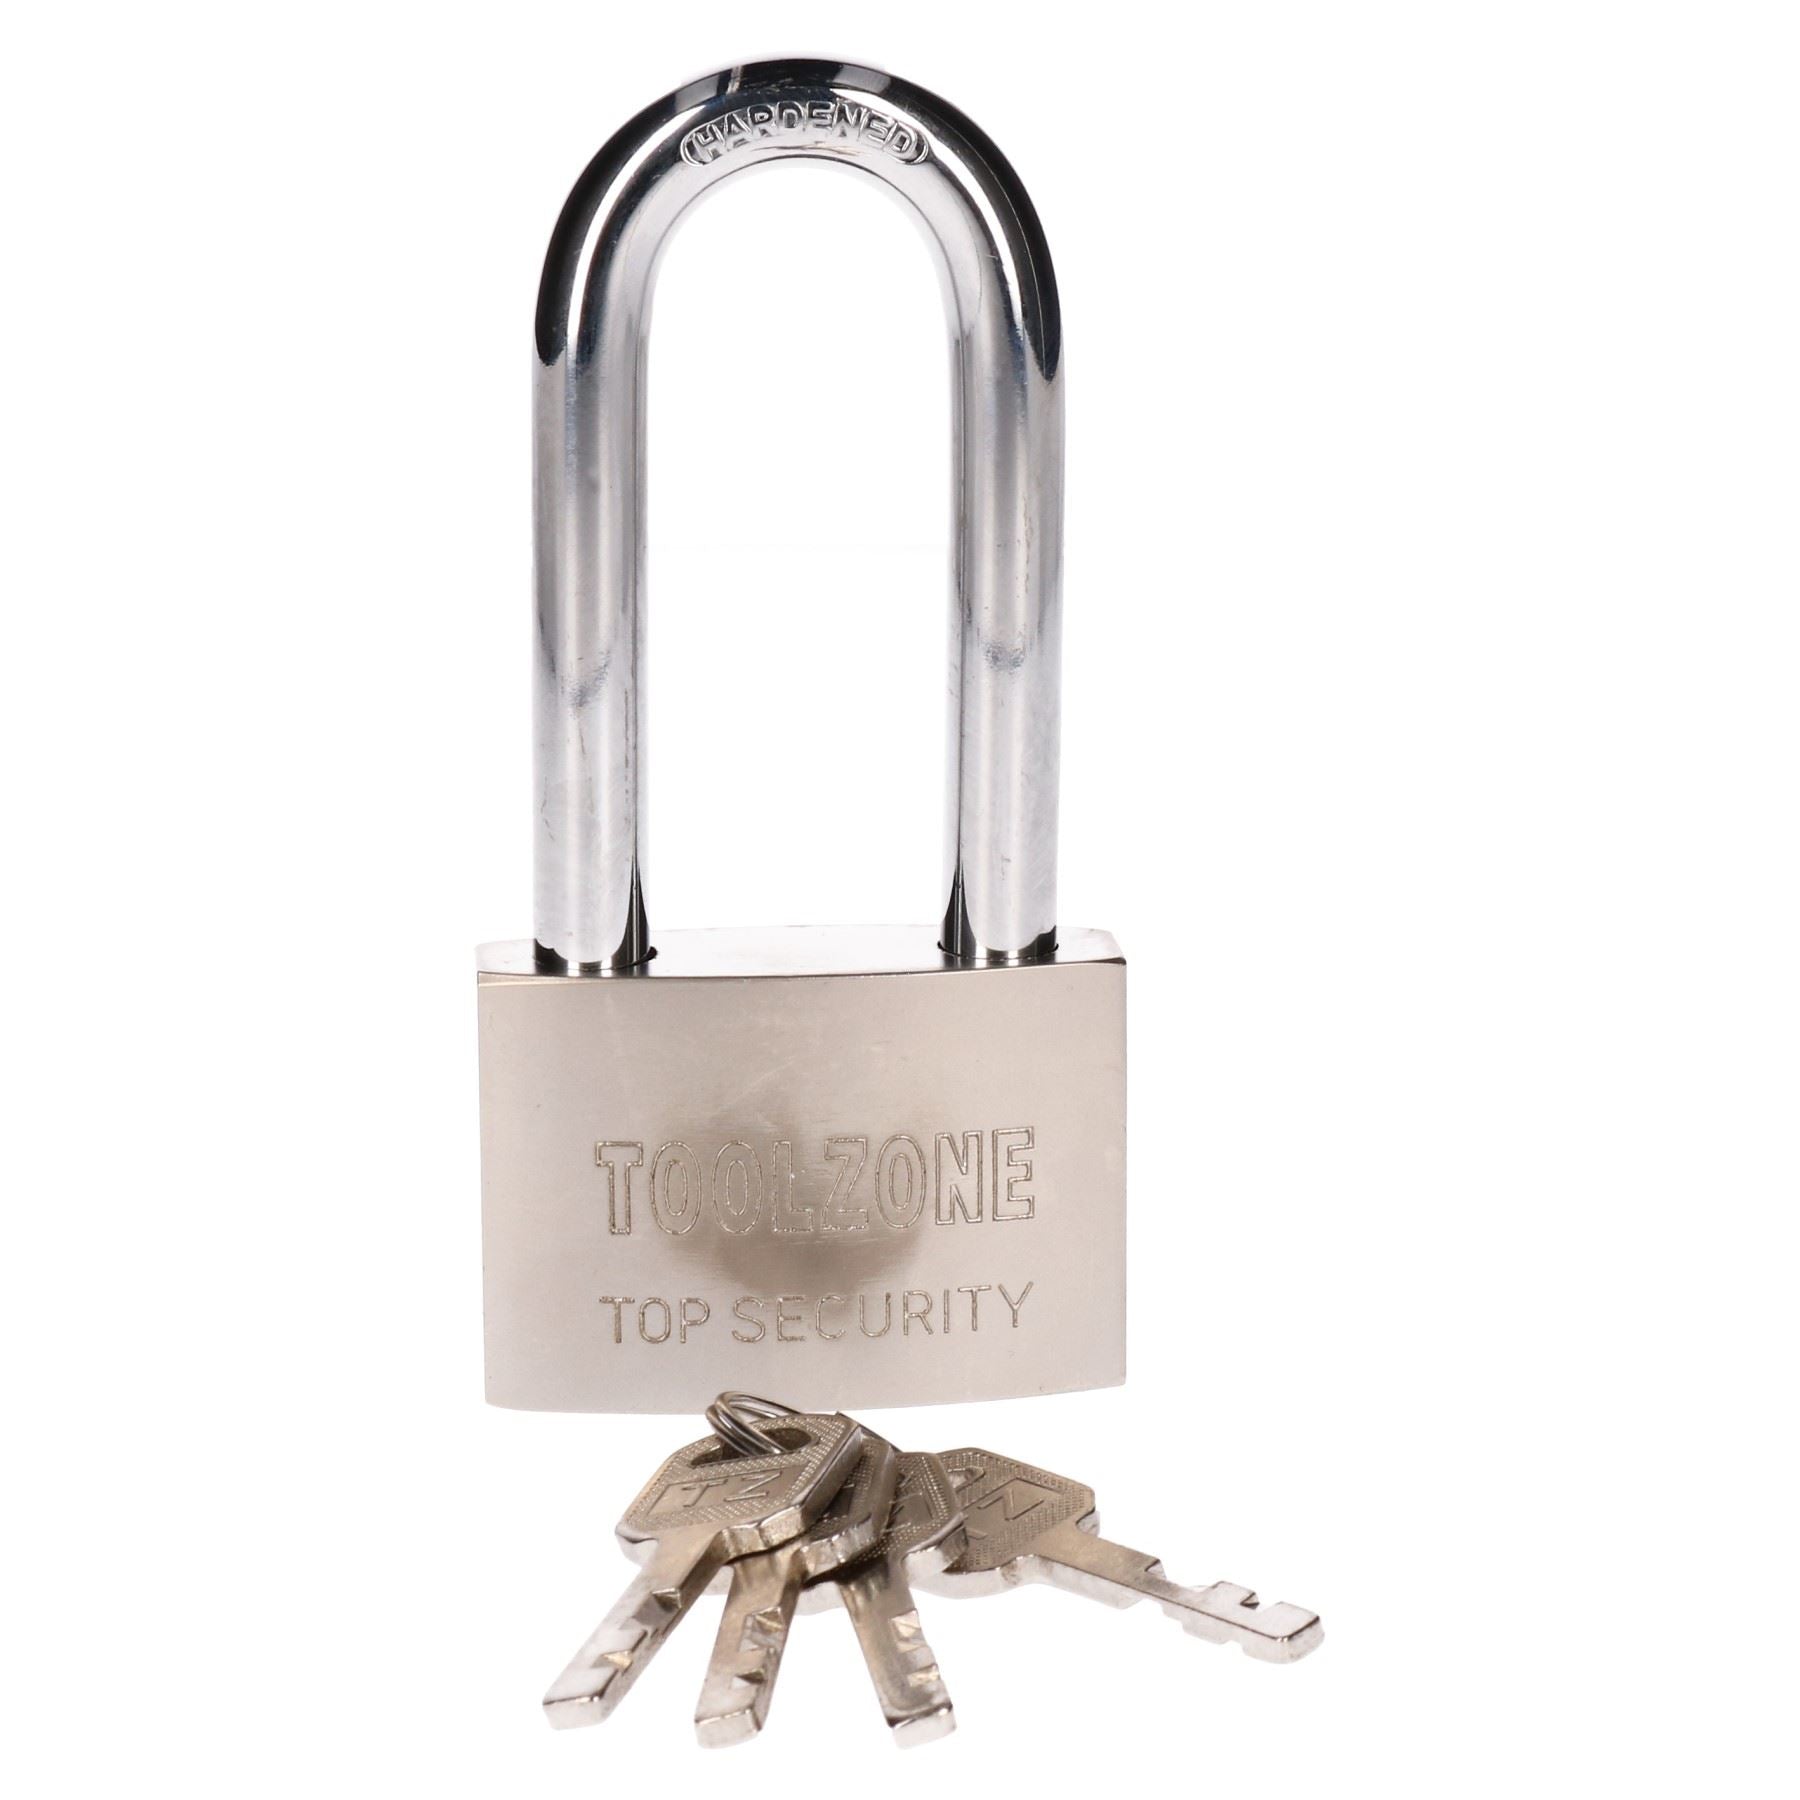 60mm long shackle padlock 4 keys security / lock / shed / garage TE622